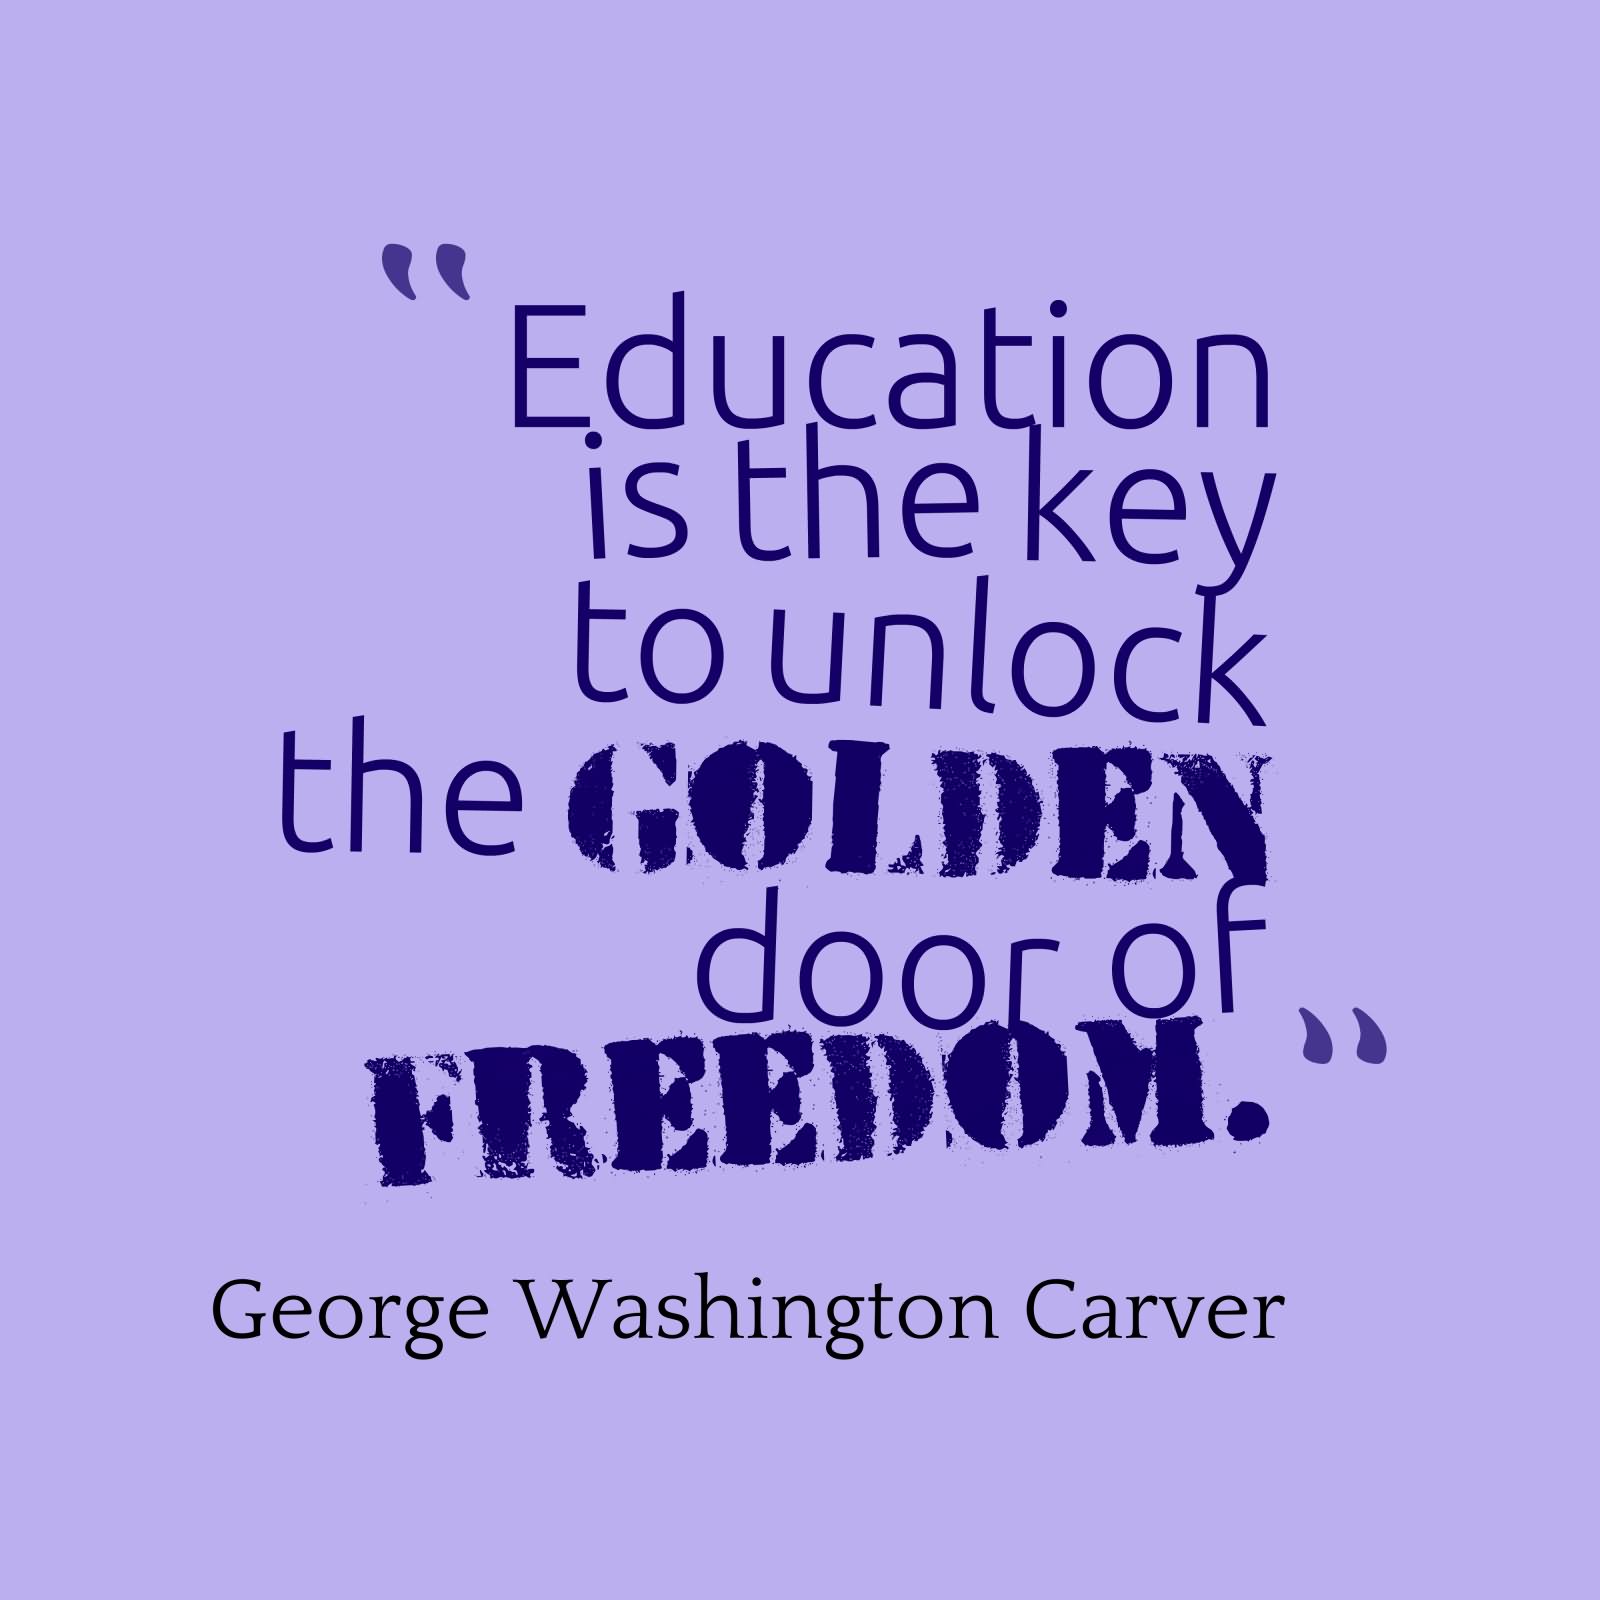 Education is the key to unlock the golden door of freedom. - George Washington